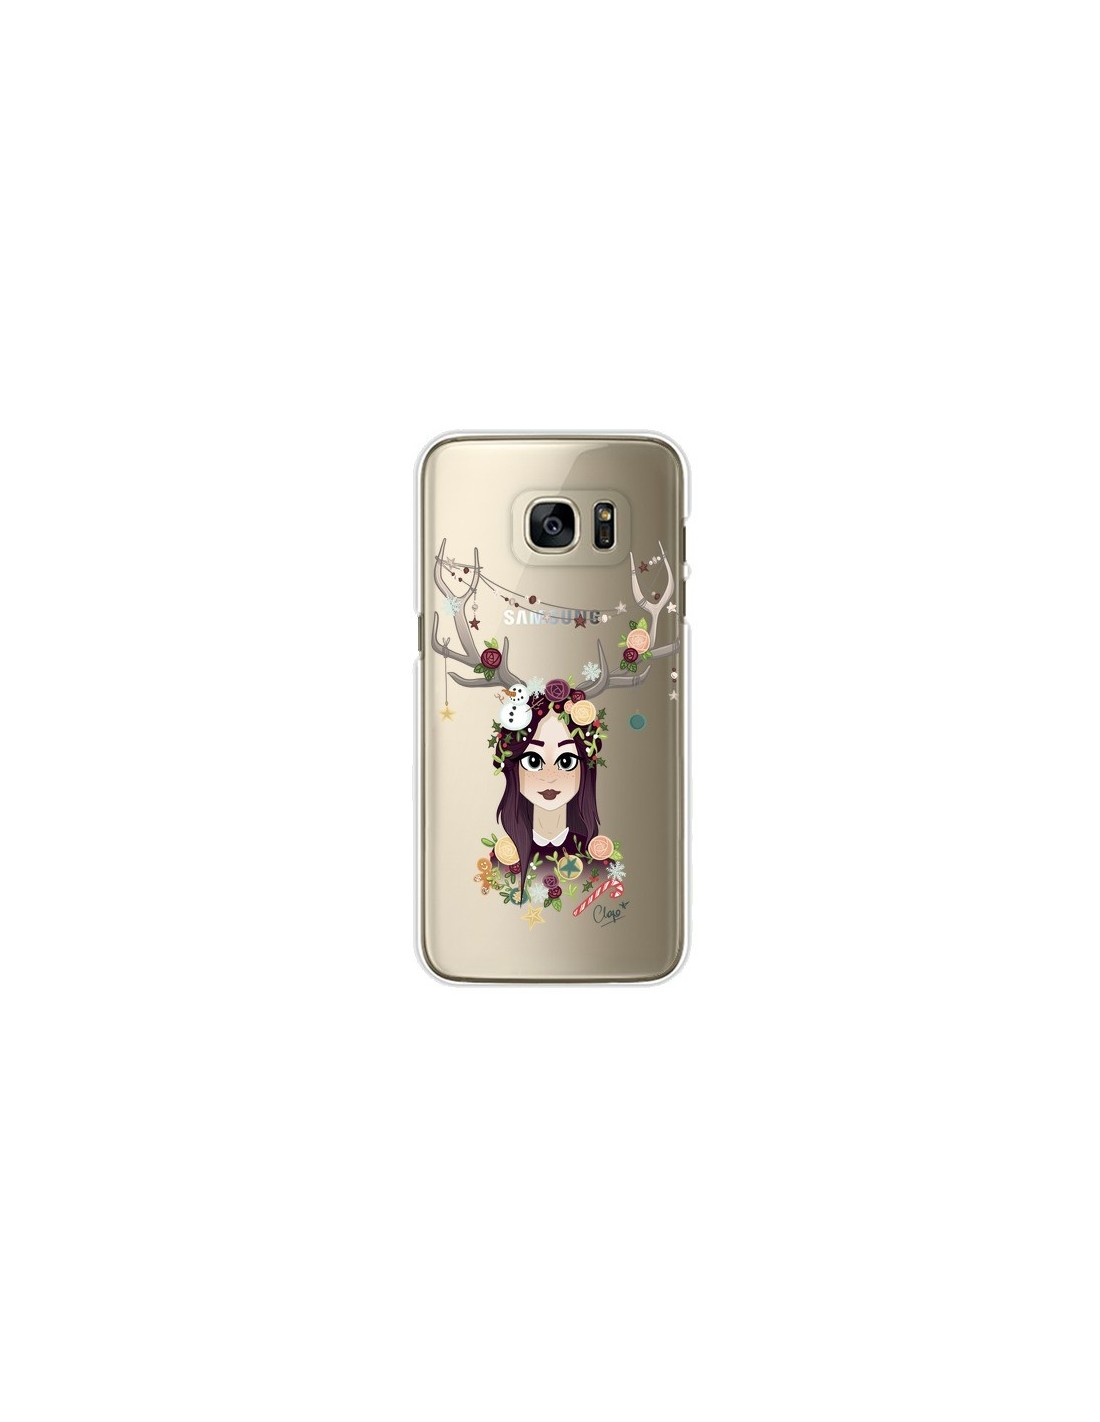 Coque Christmas Girl Femme Noel Bois Cerf Transparente pour Samsung Galaxy S7 Edge - Chapo